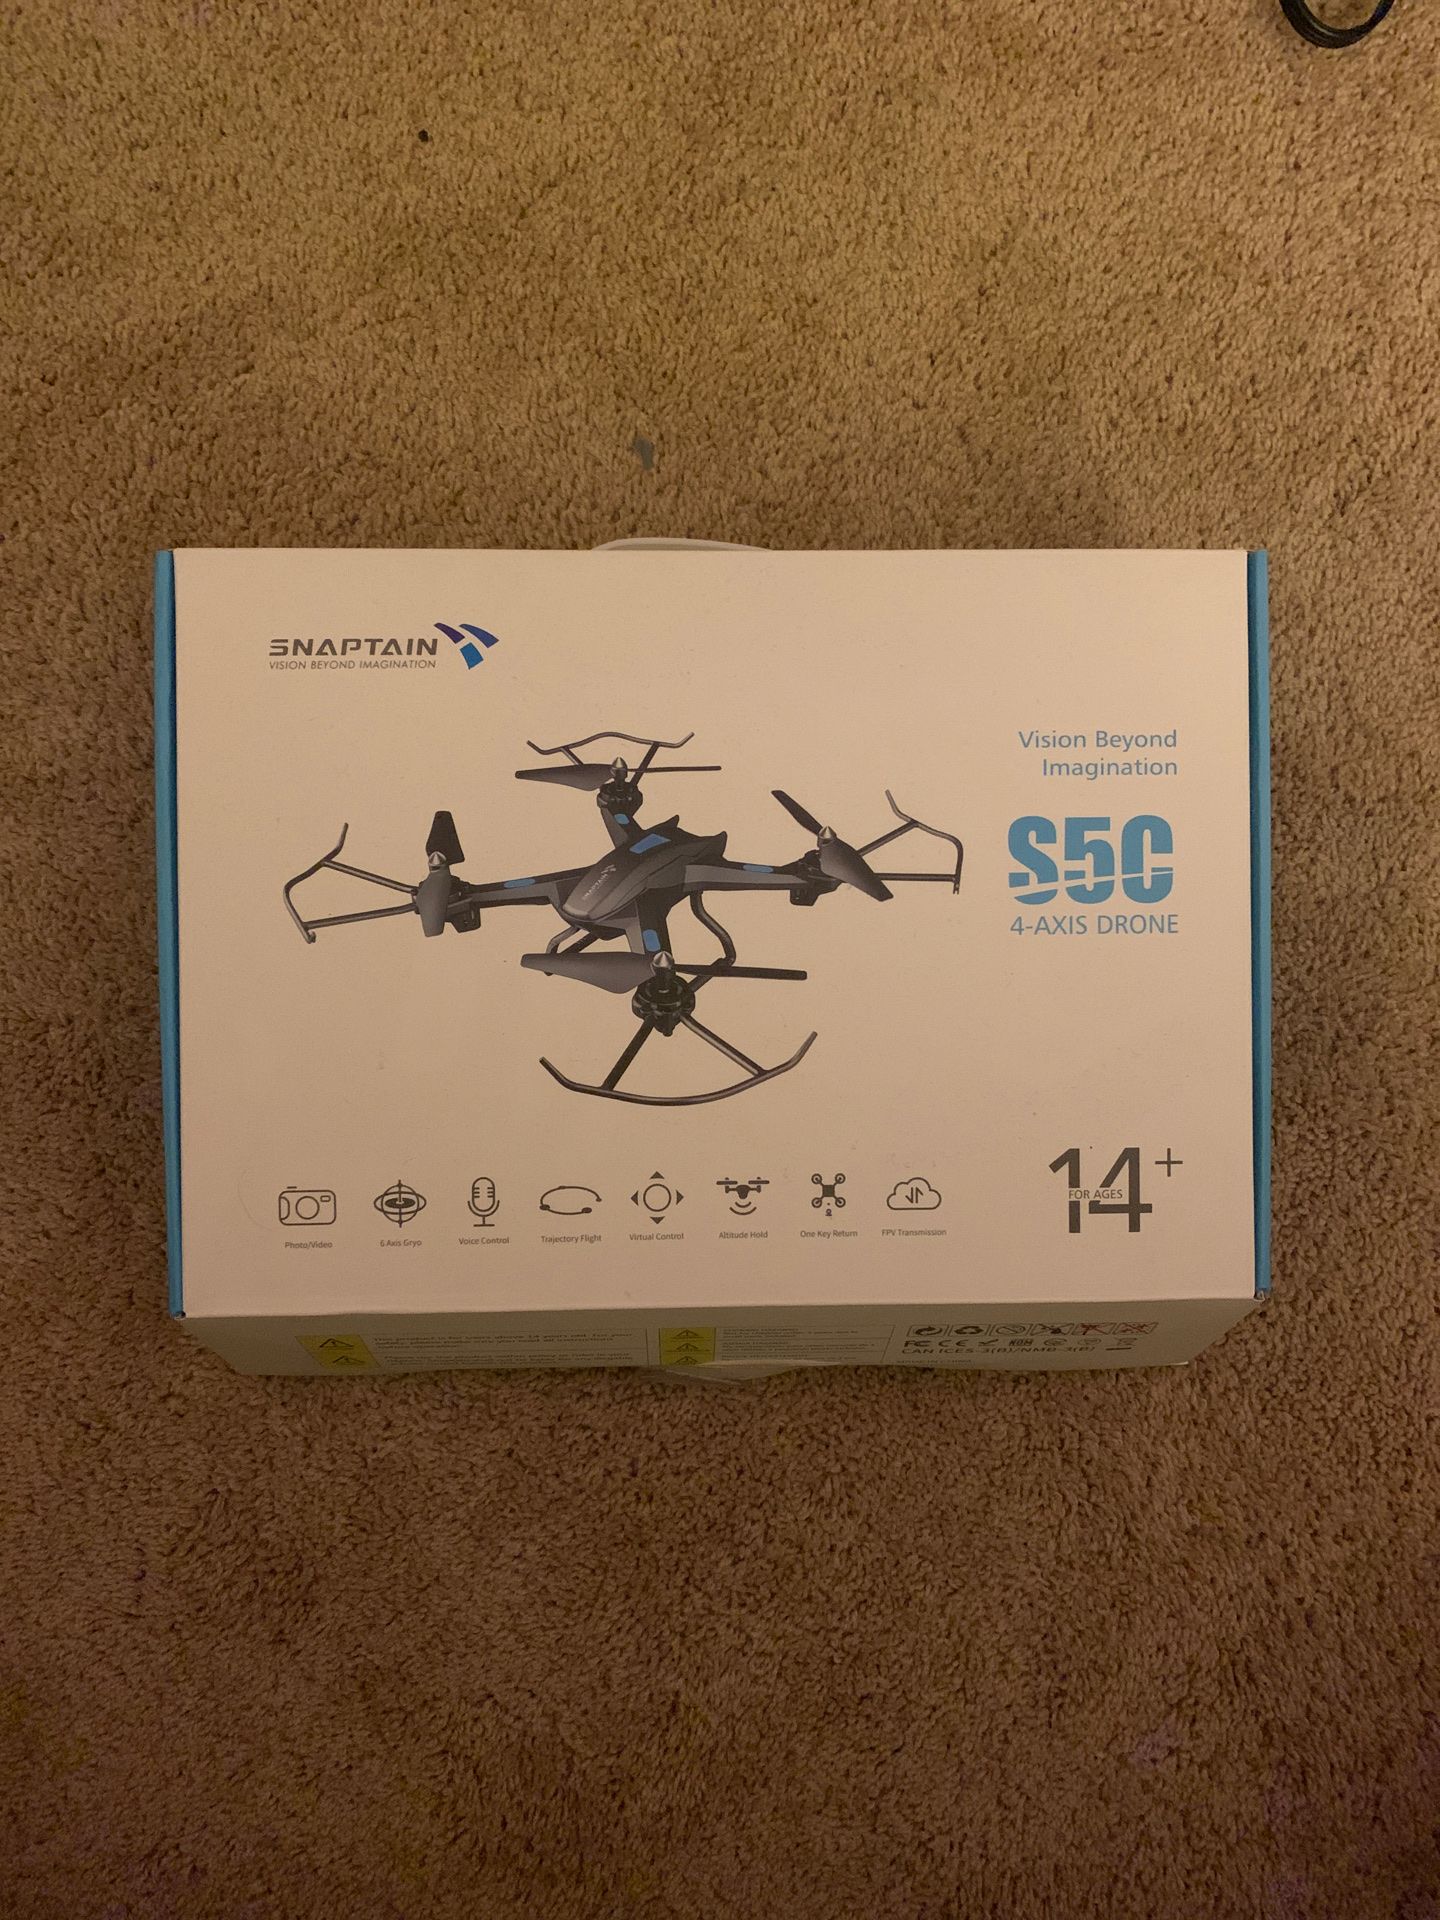 Snaptain S5C drone 720p camera